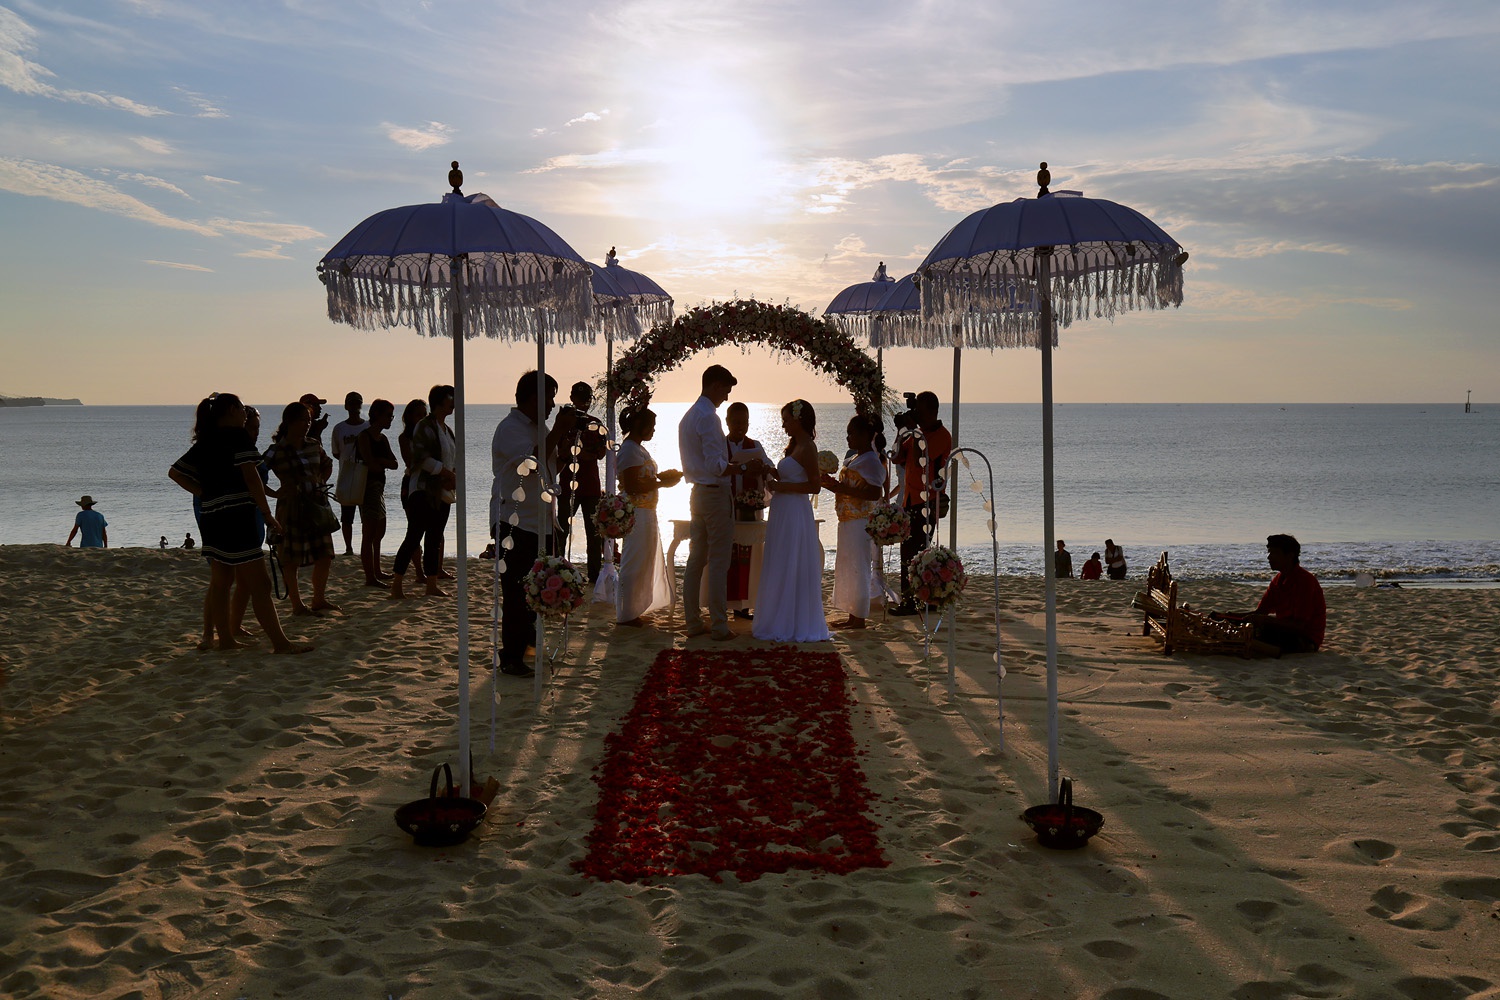 bill-hocker-tourism-wedding-kenodongnan-beach-jimbaran-bali-indonesia-2016